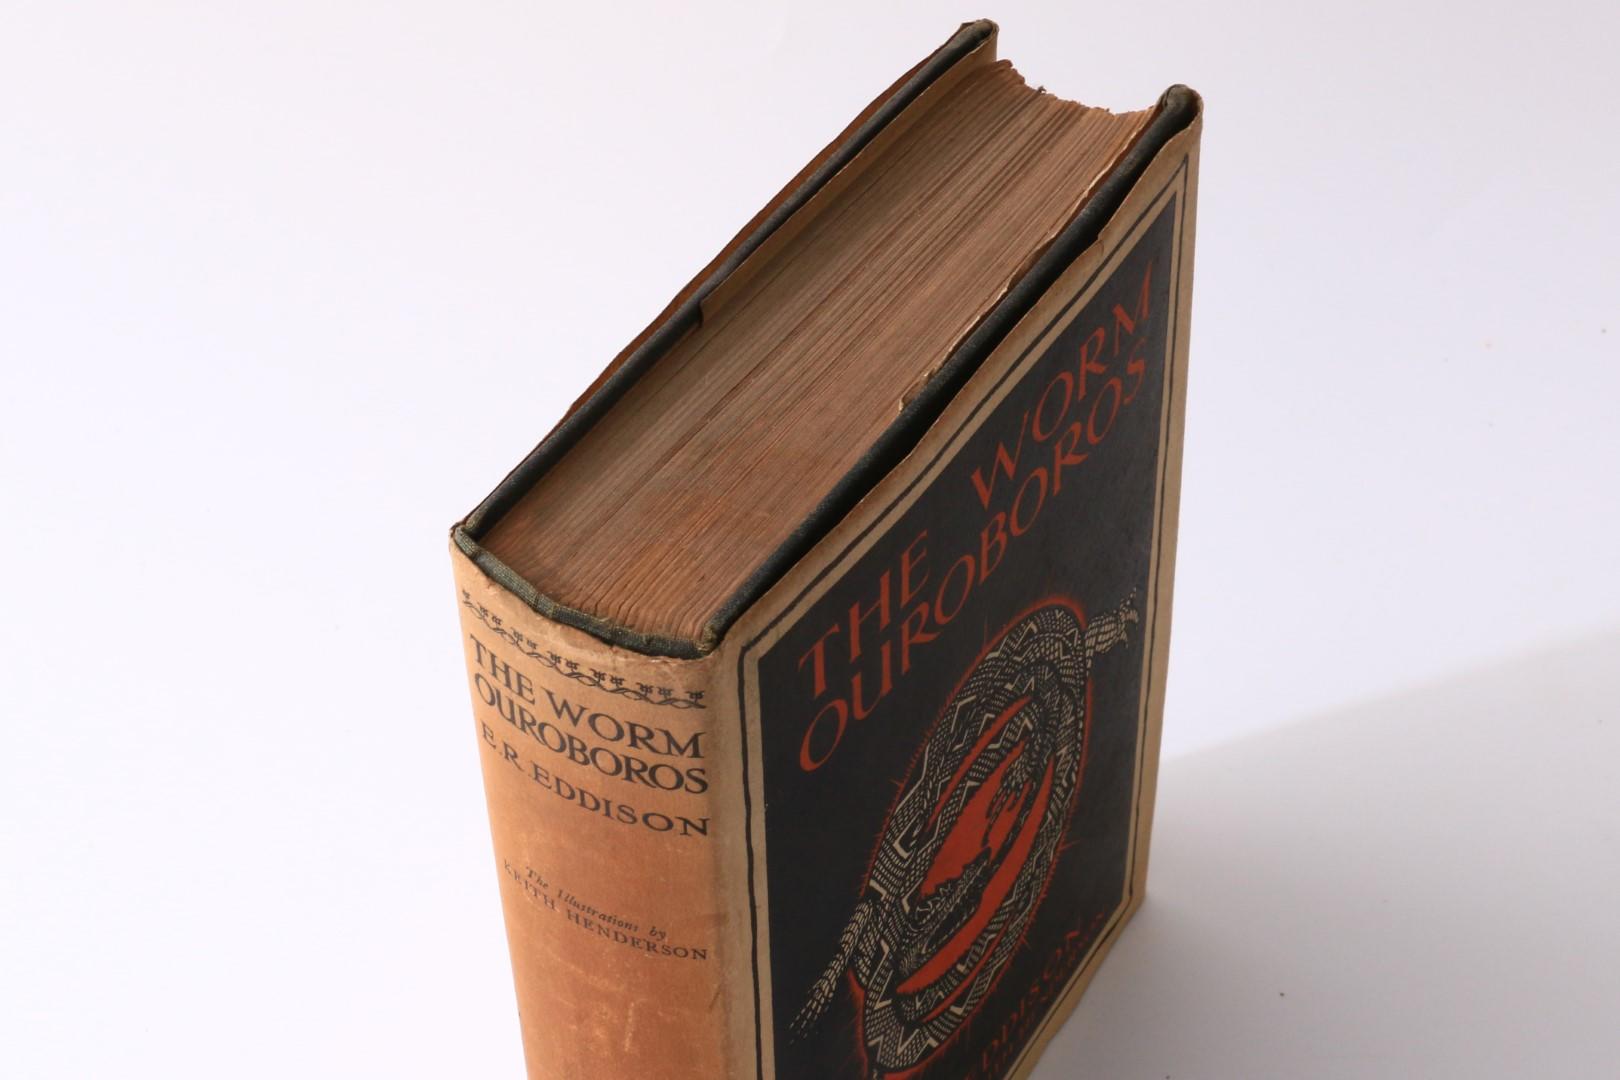 E.R. Eddison - The Worm Ouroboros - Jonathan Cape, 1922, Signed First Edition.